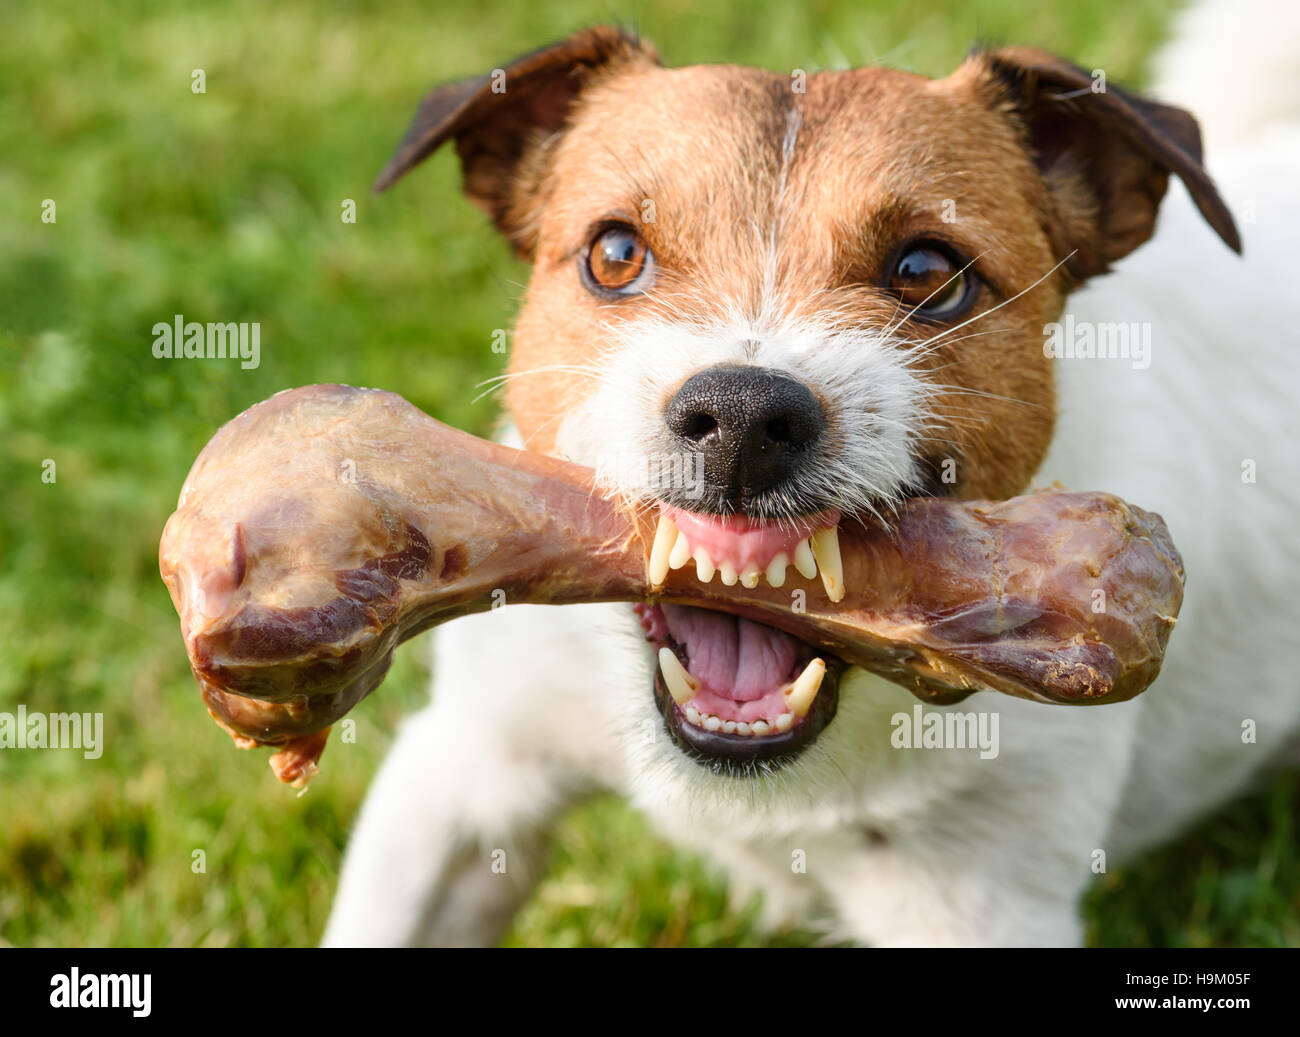 Frightening jaws of angry dog protecting big bone Stock Photo